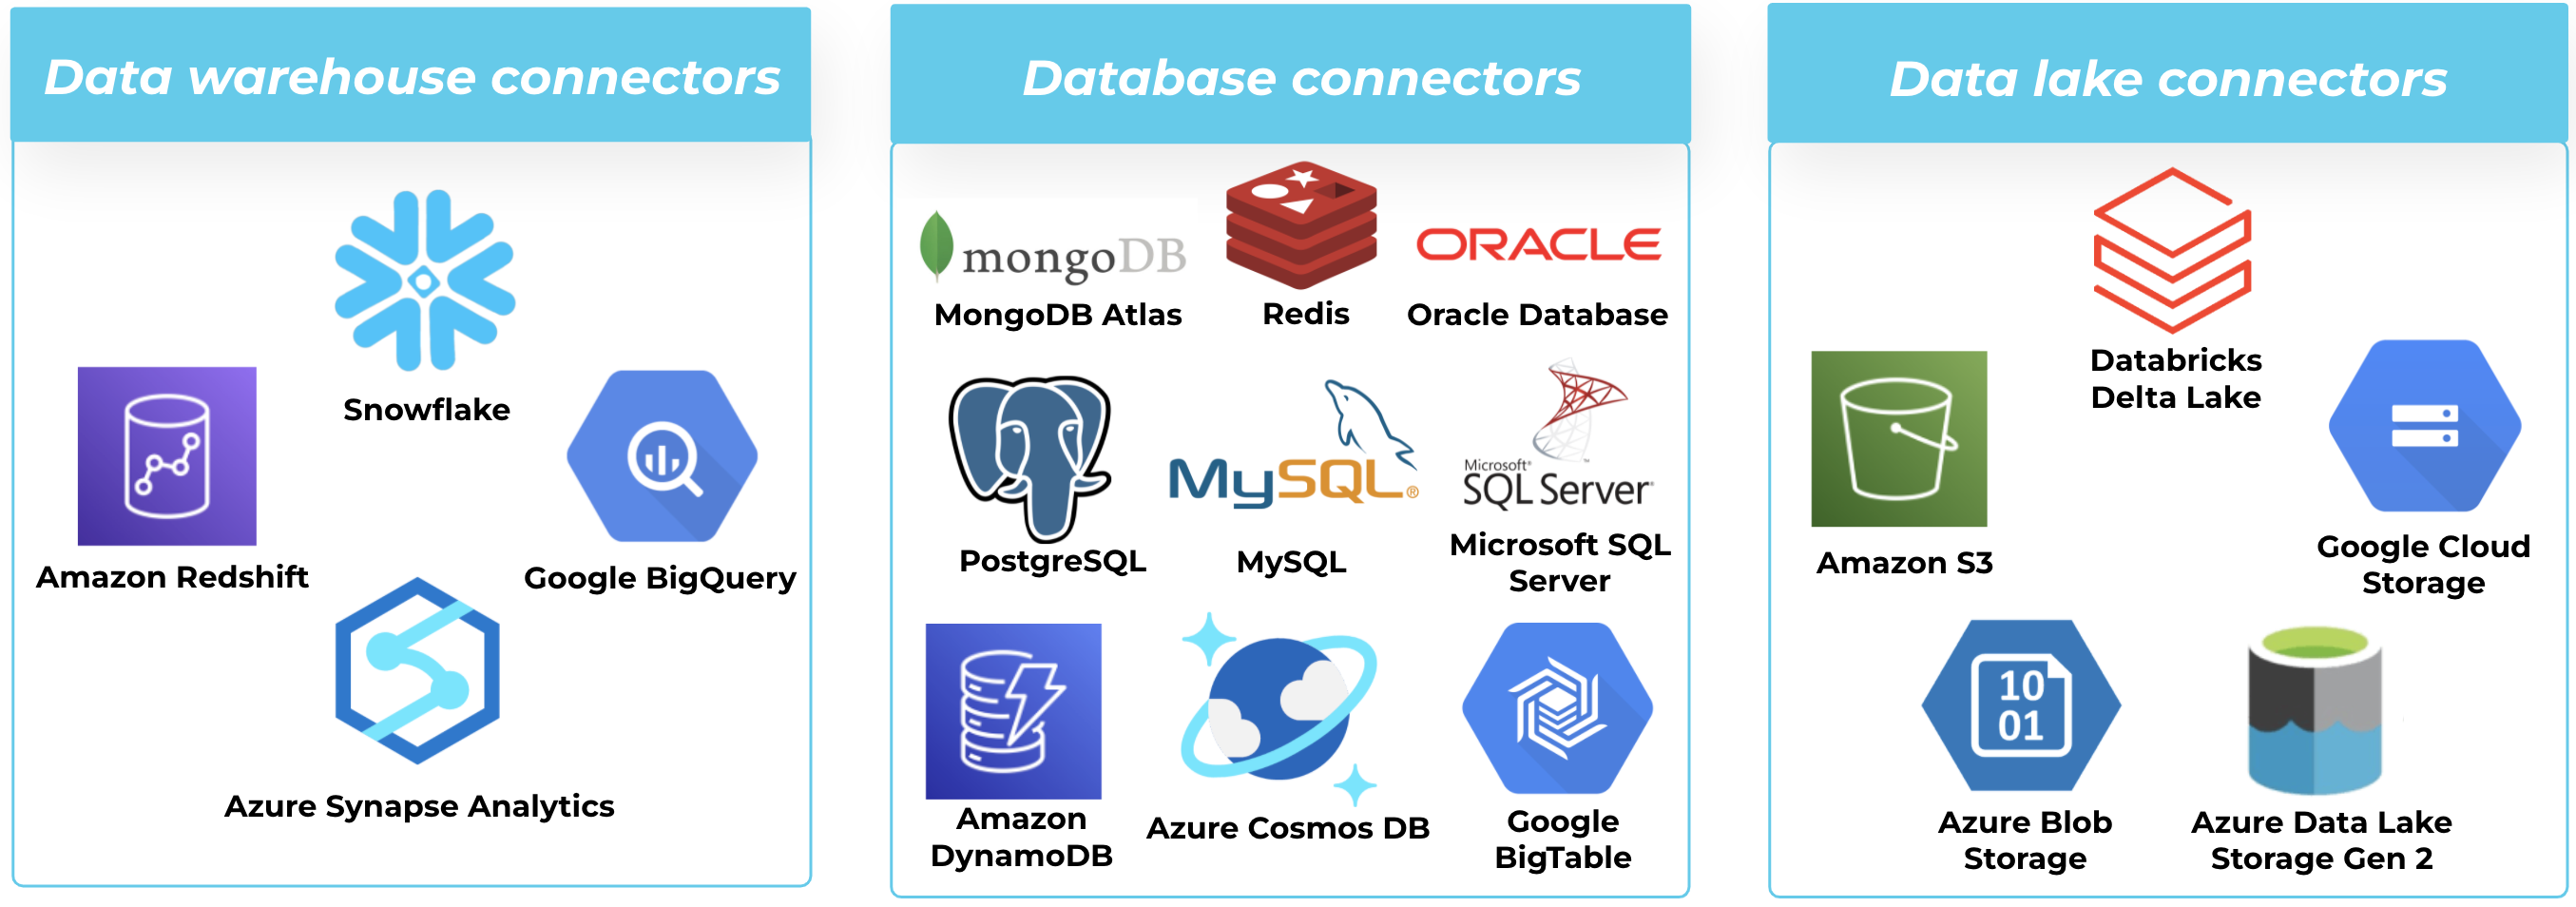 Data warehouse, database, and data lake connectors